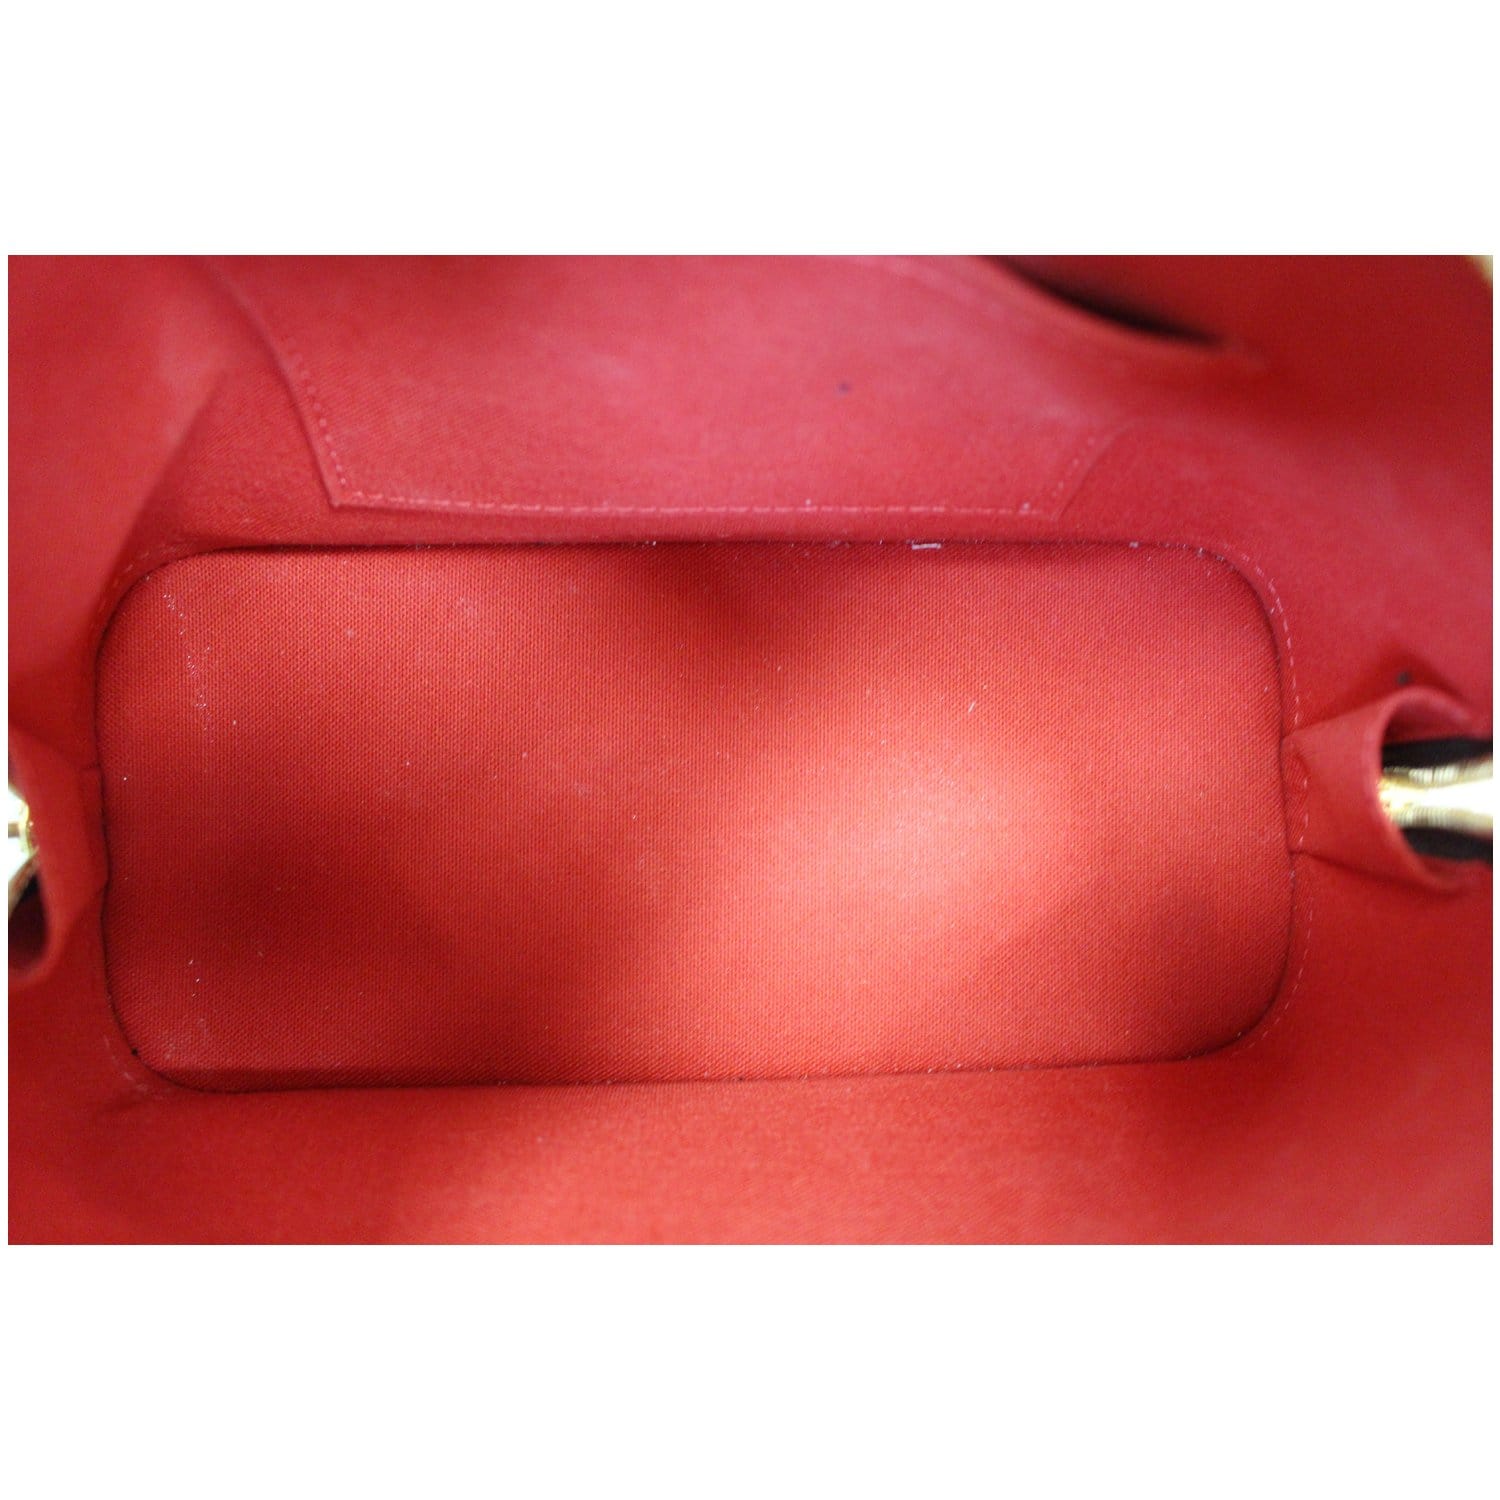 Alma bb leather handbag Louis Vuitton Brown in Leather - 31319088